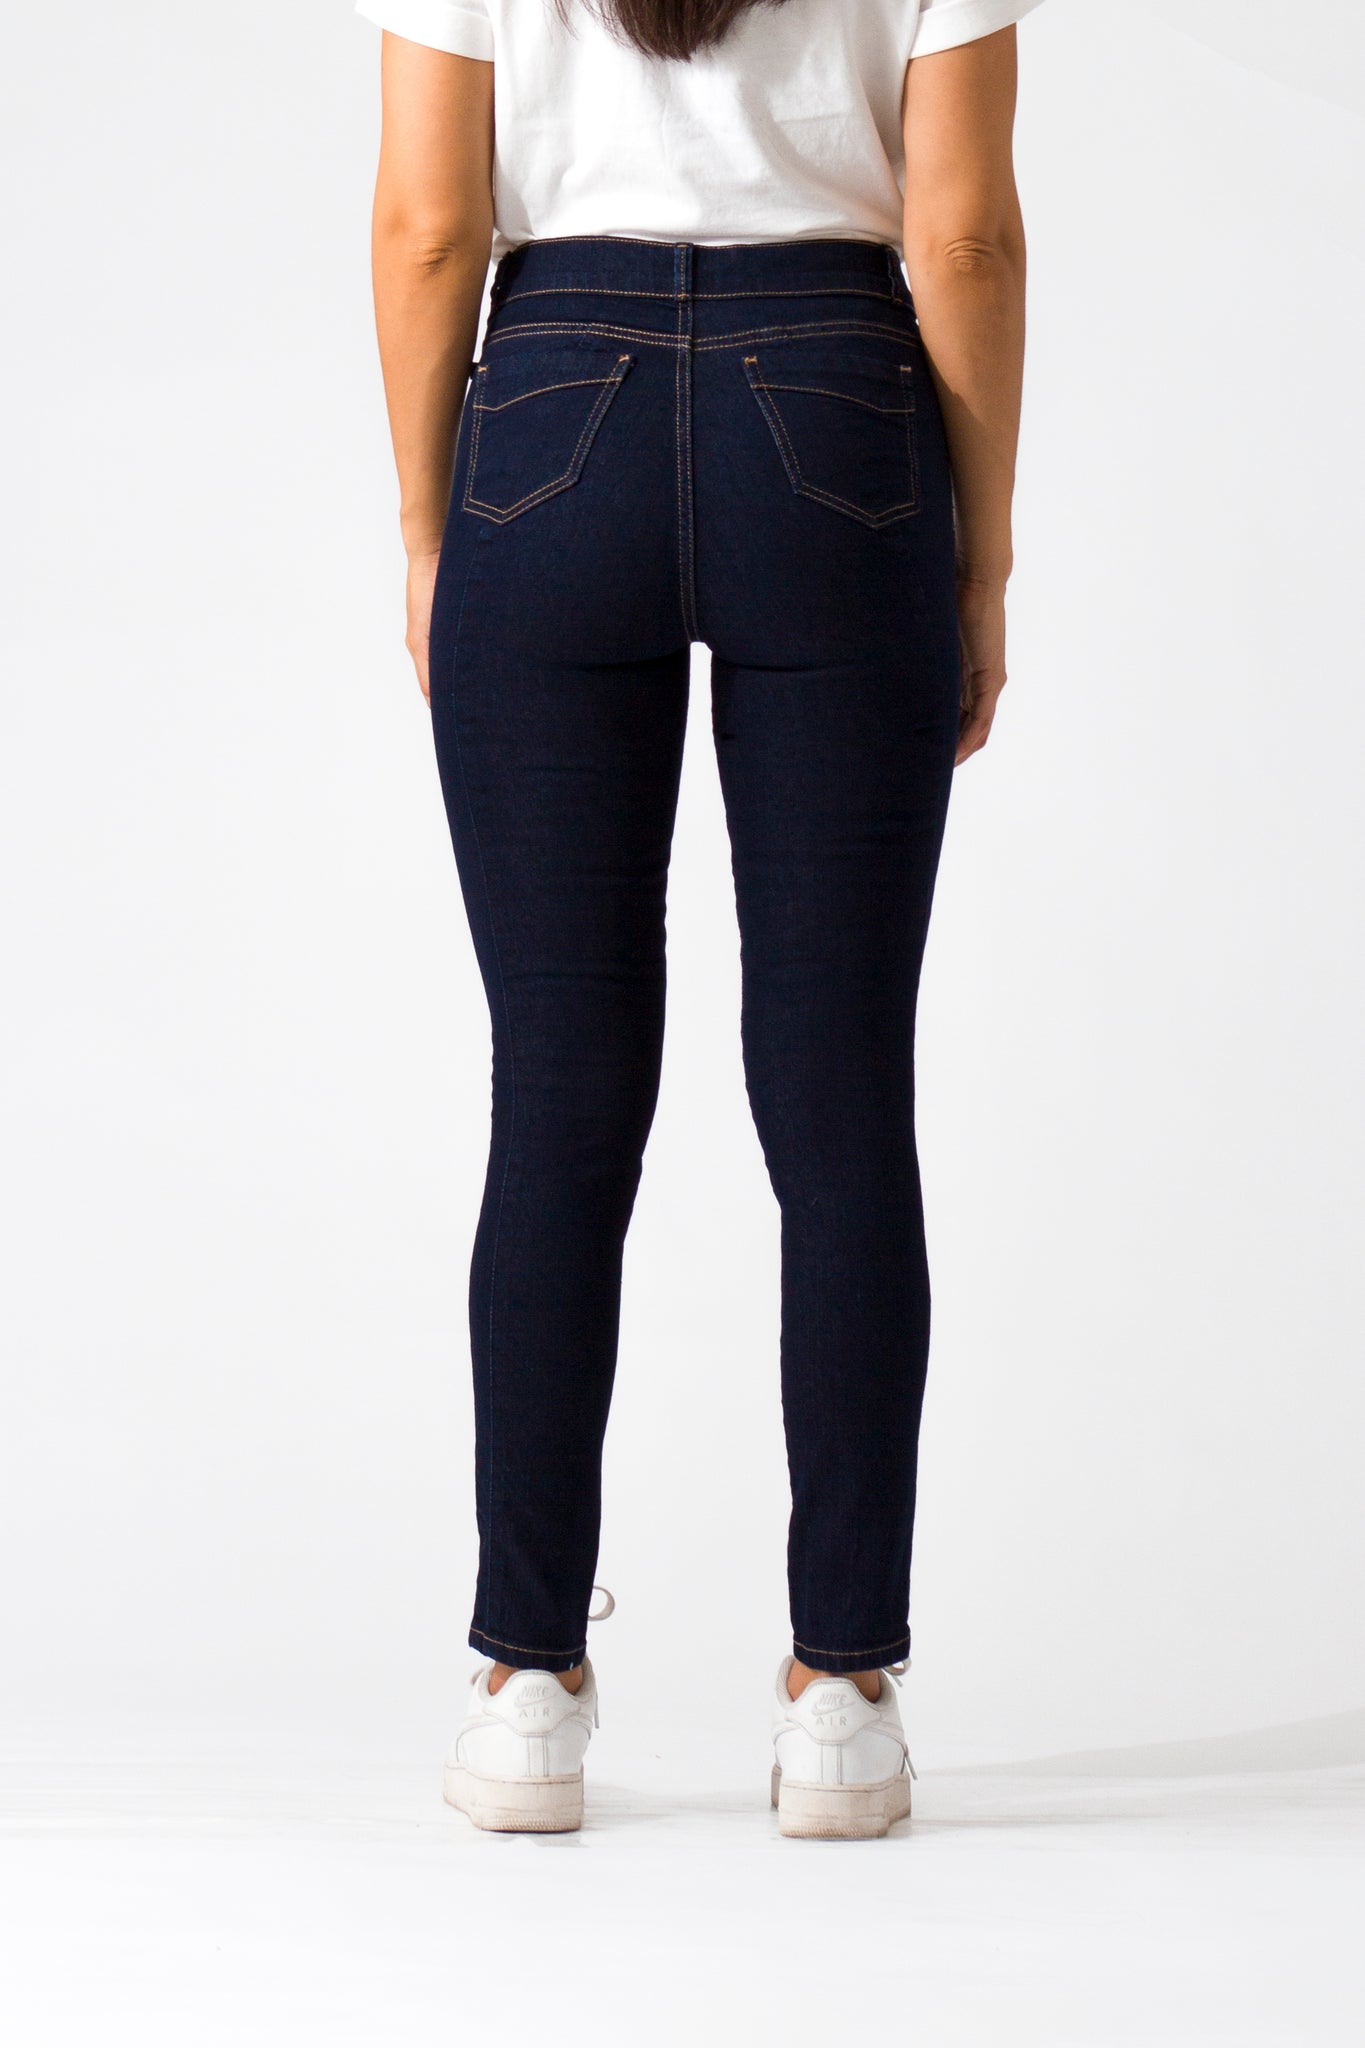 OHPOMP!® Basics, Cintura Media Skinny Jeans Azul Oscuro D1010